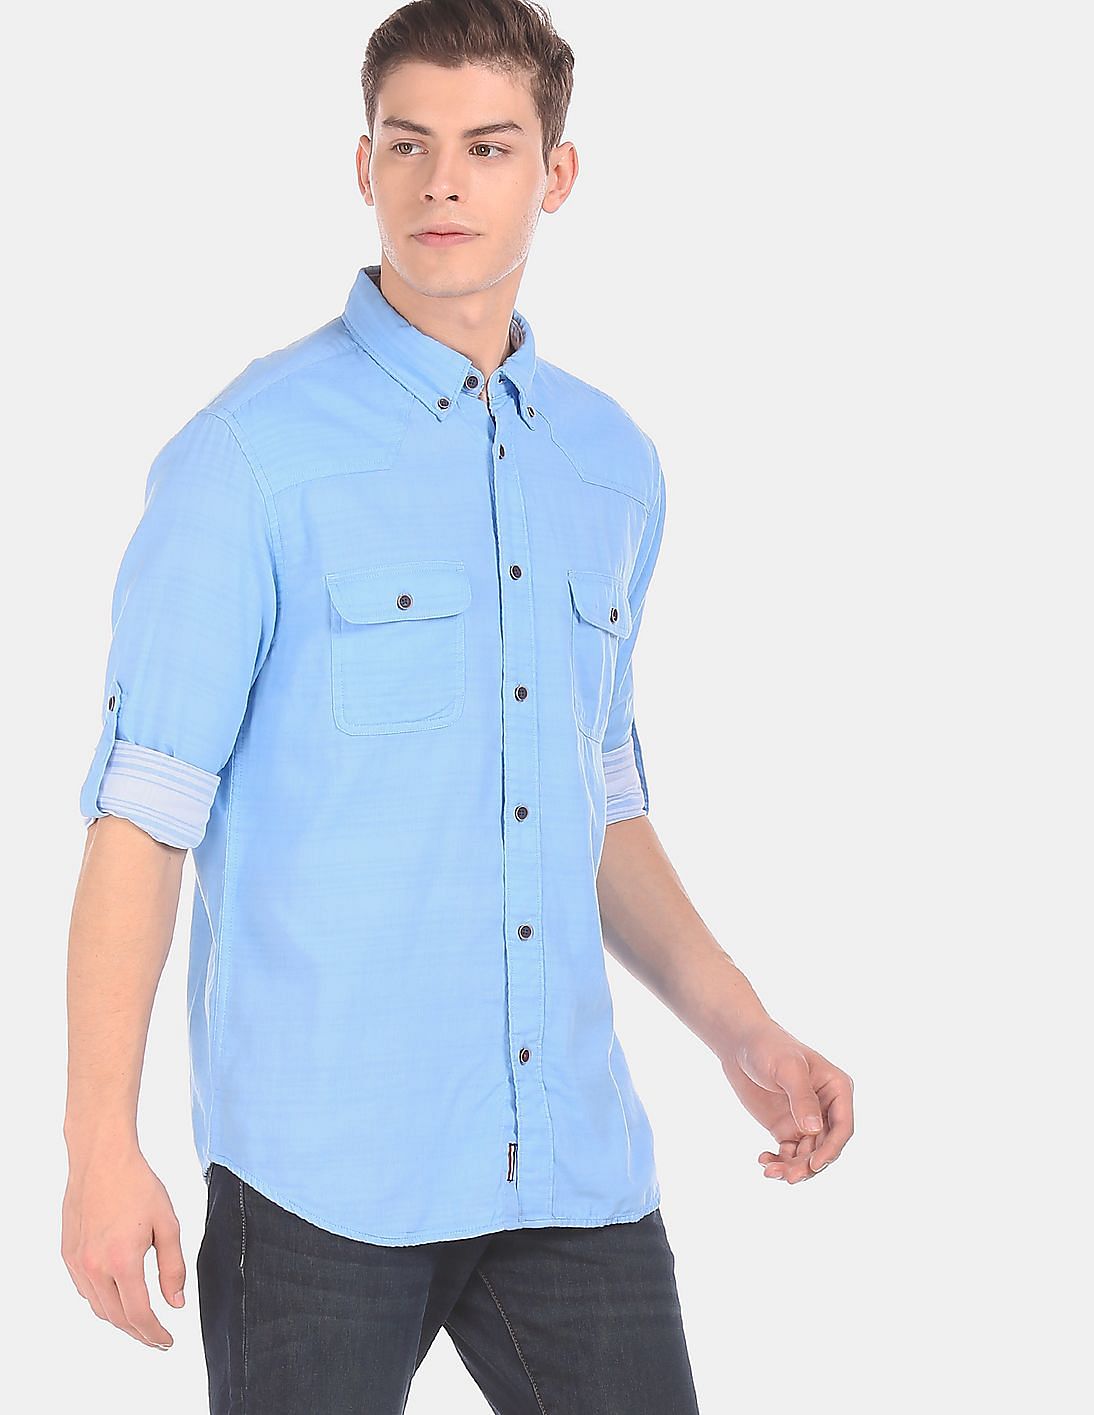 Buy Aeropostale Men Blue Button-Down Collar Solid Casual Shirt - NNNOW.com